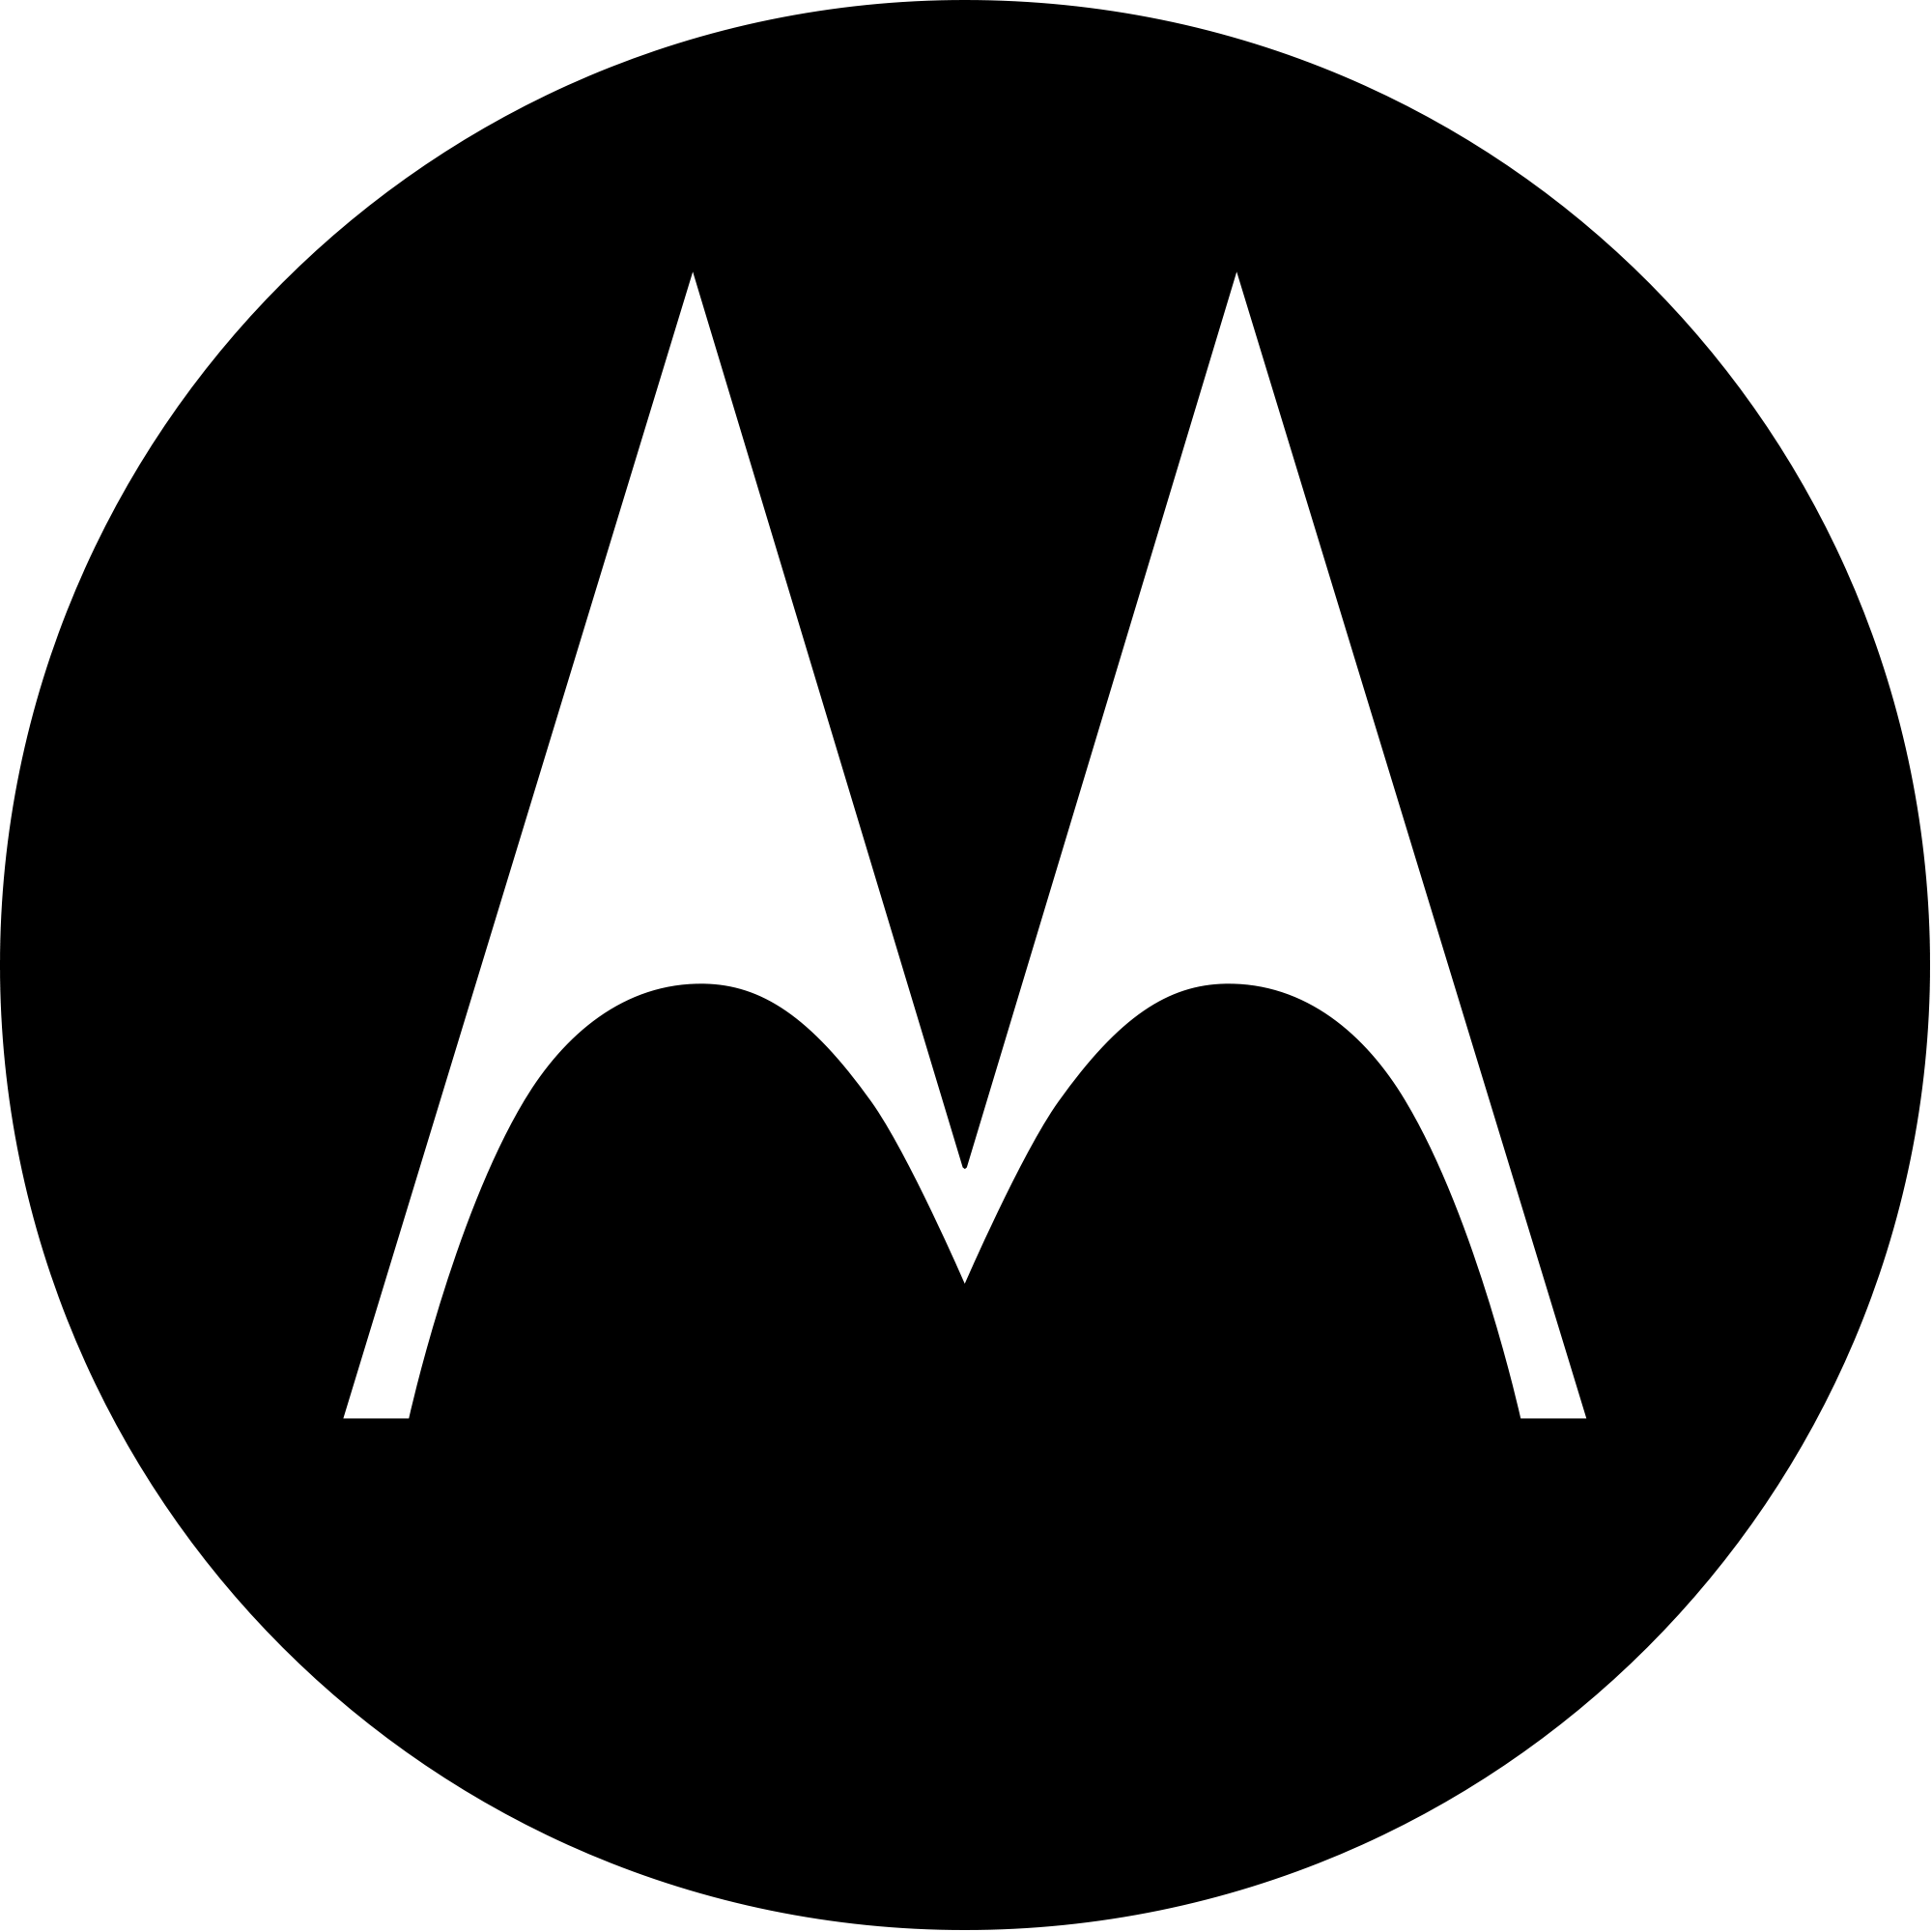 Black M Logo - File:Motorola M symbol black.svg - Wikimedia Commons